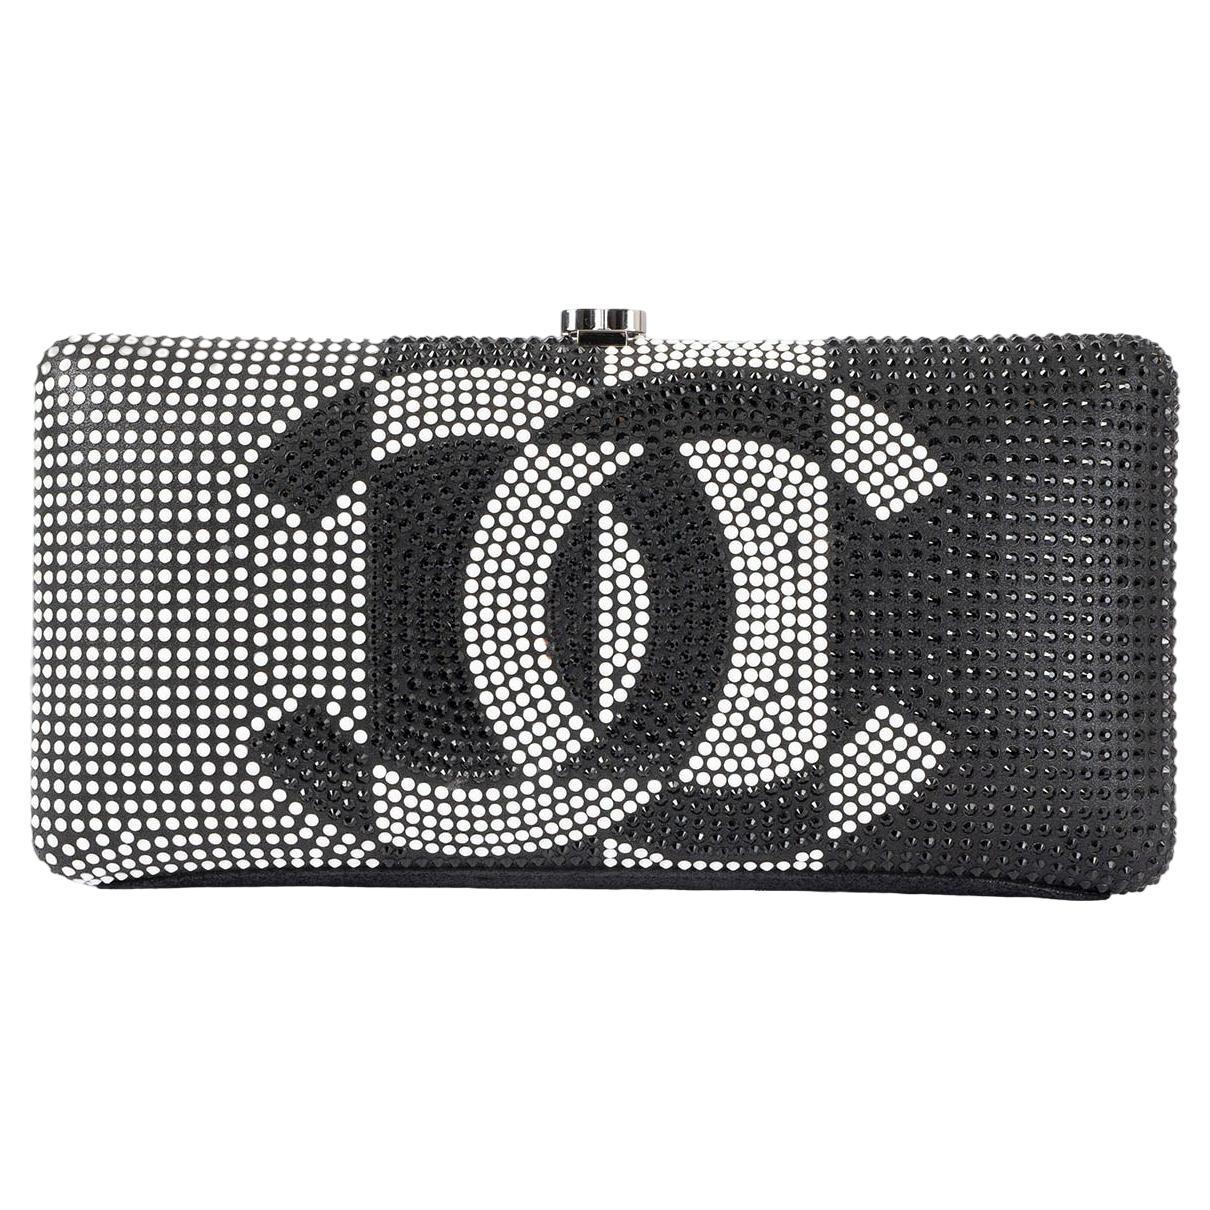 CHANEL black & white 2015 15C DUBAI STRASS CC MINAUDIERE Clutch Bag w Chain For Sale